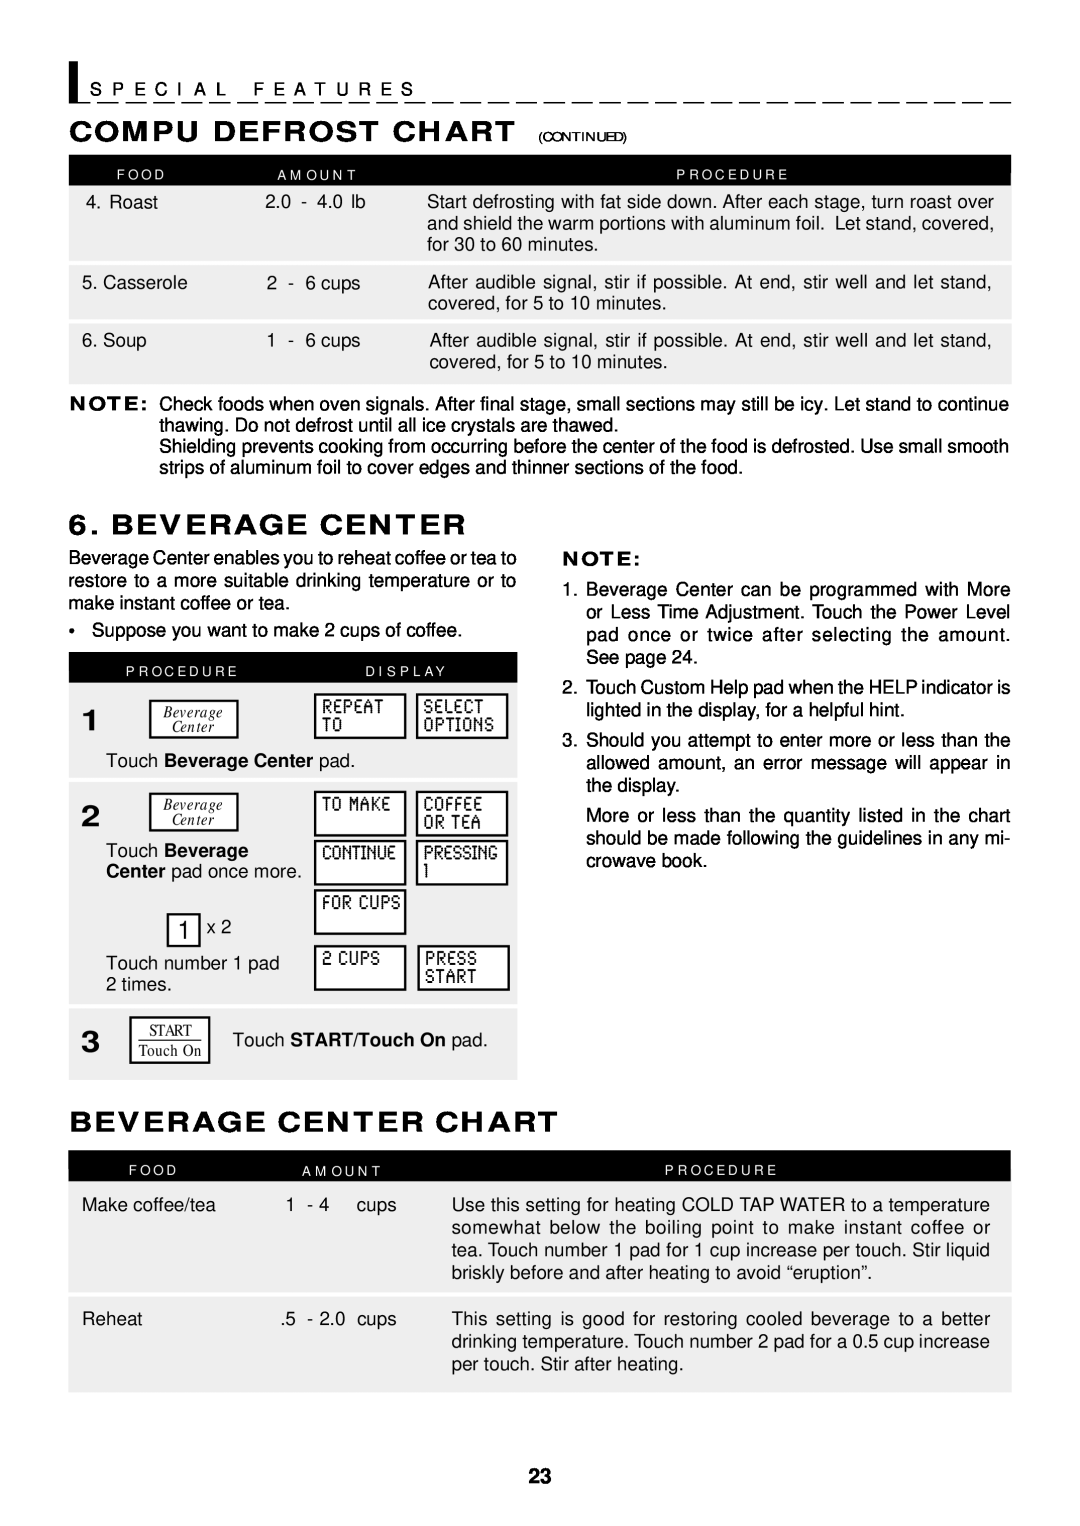 Sharp R-1610 Compu Defrost Chart Continued, Beverage Center Chart, S P E C I A L F E A T U R E S, F O O D, A M O U N T 